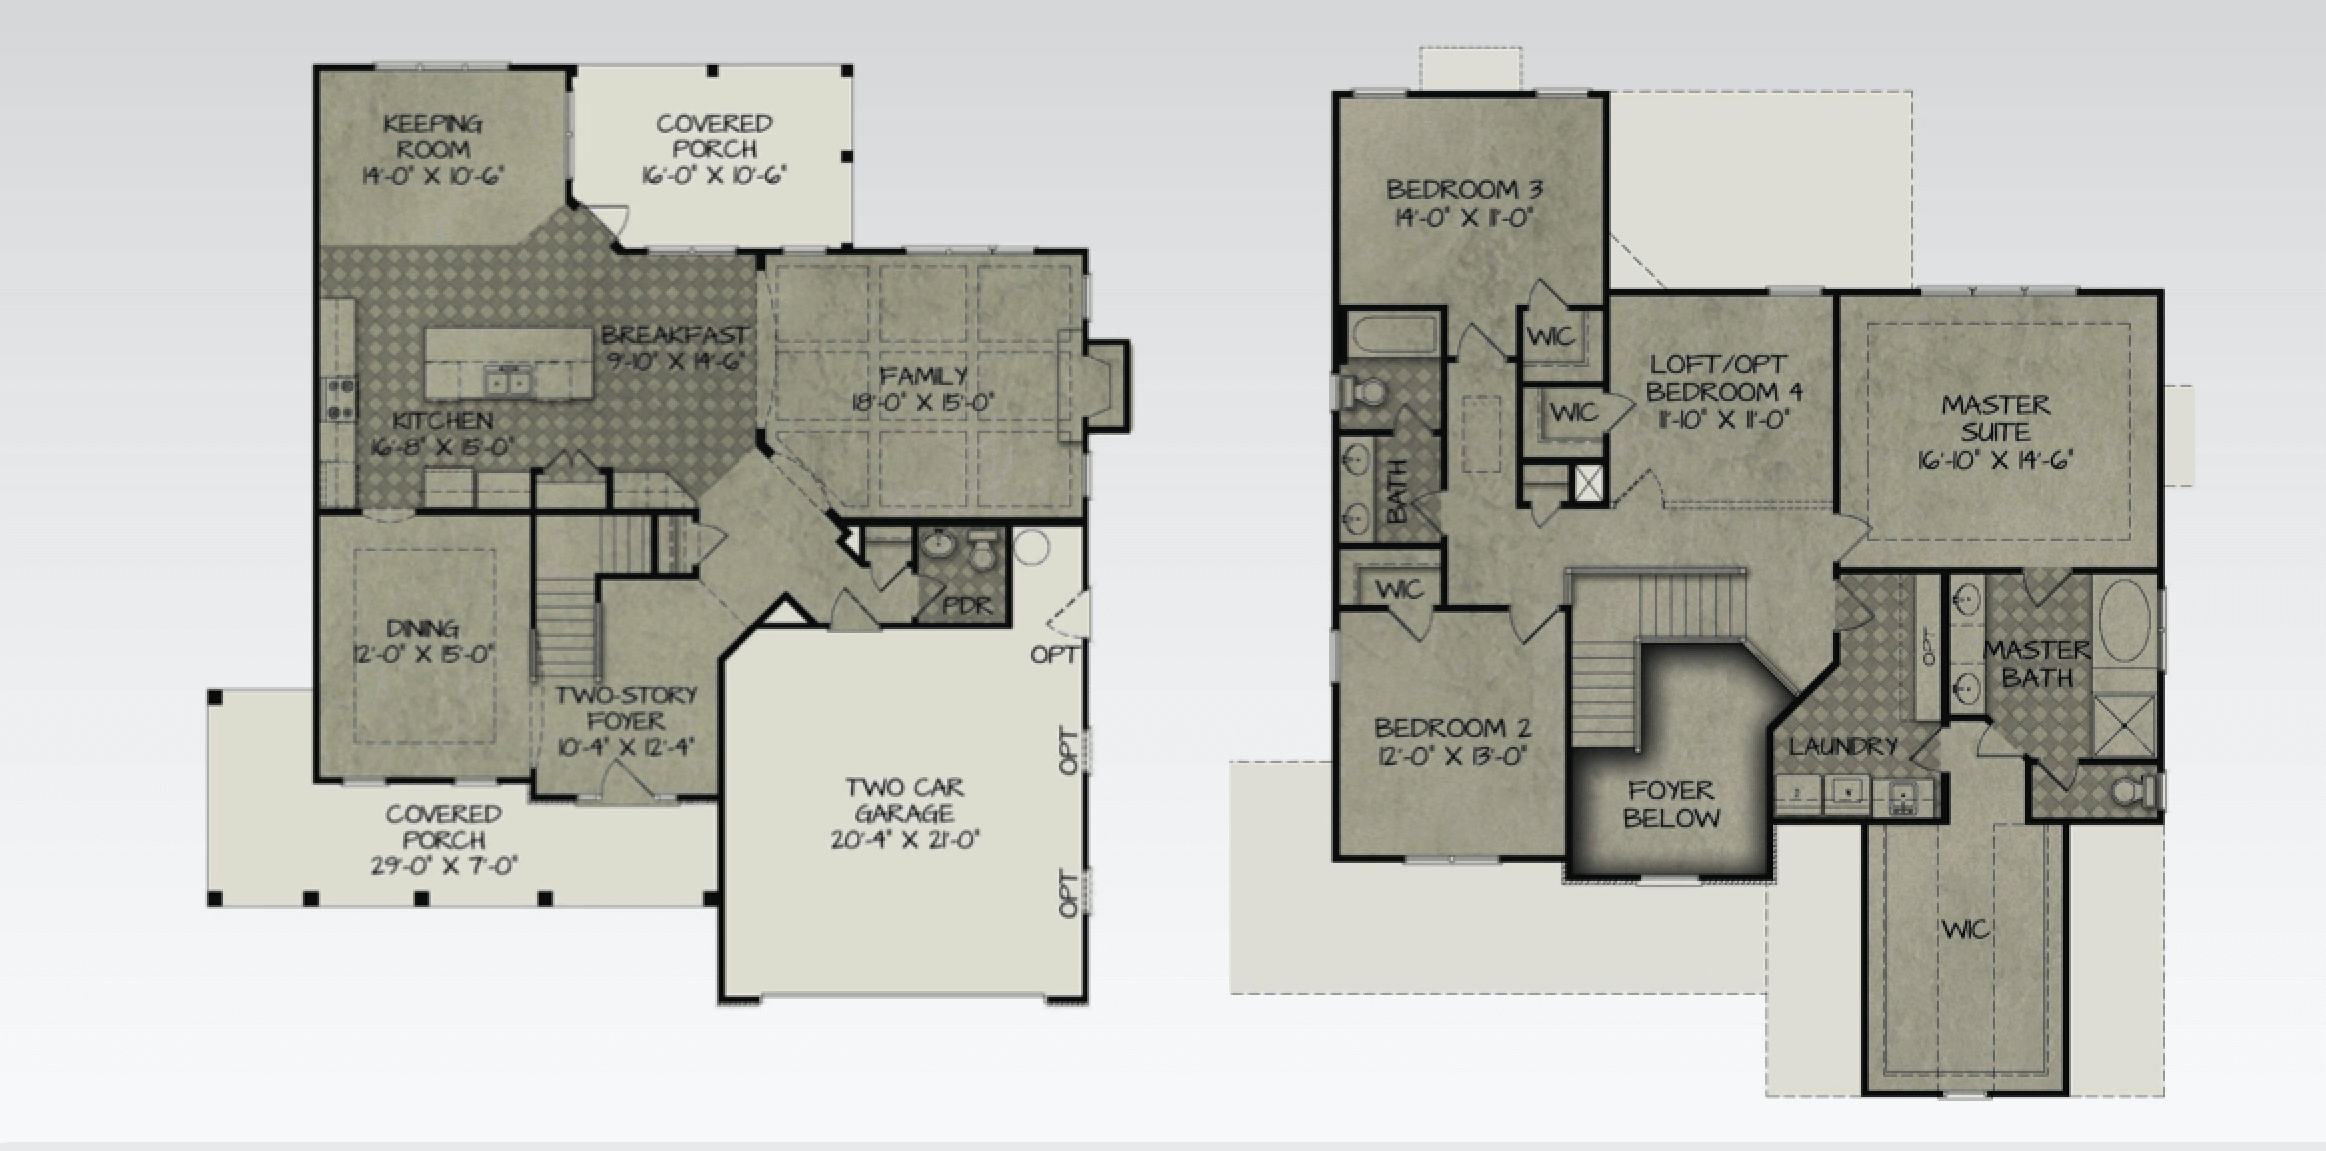 The Blue Ridge floor plan image